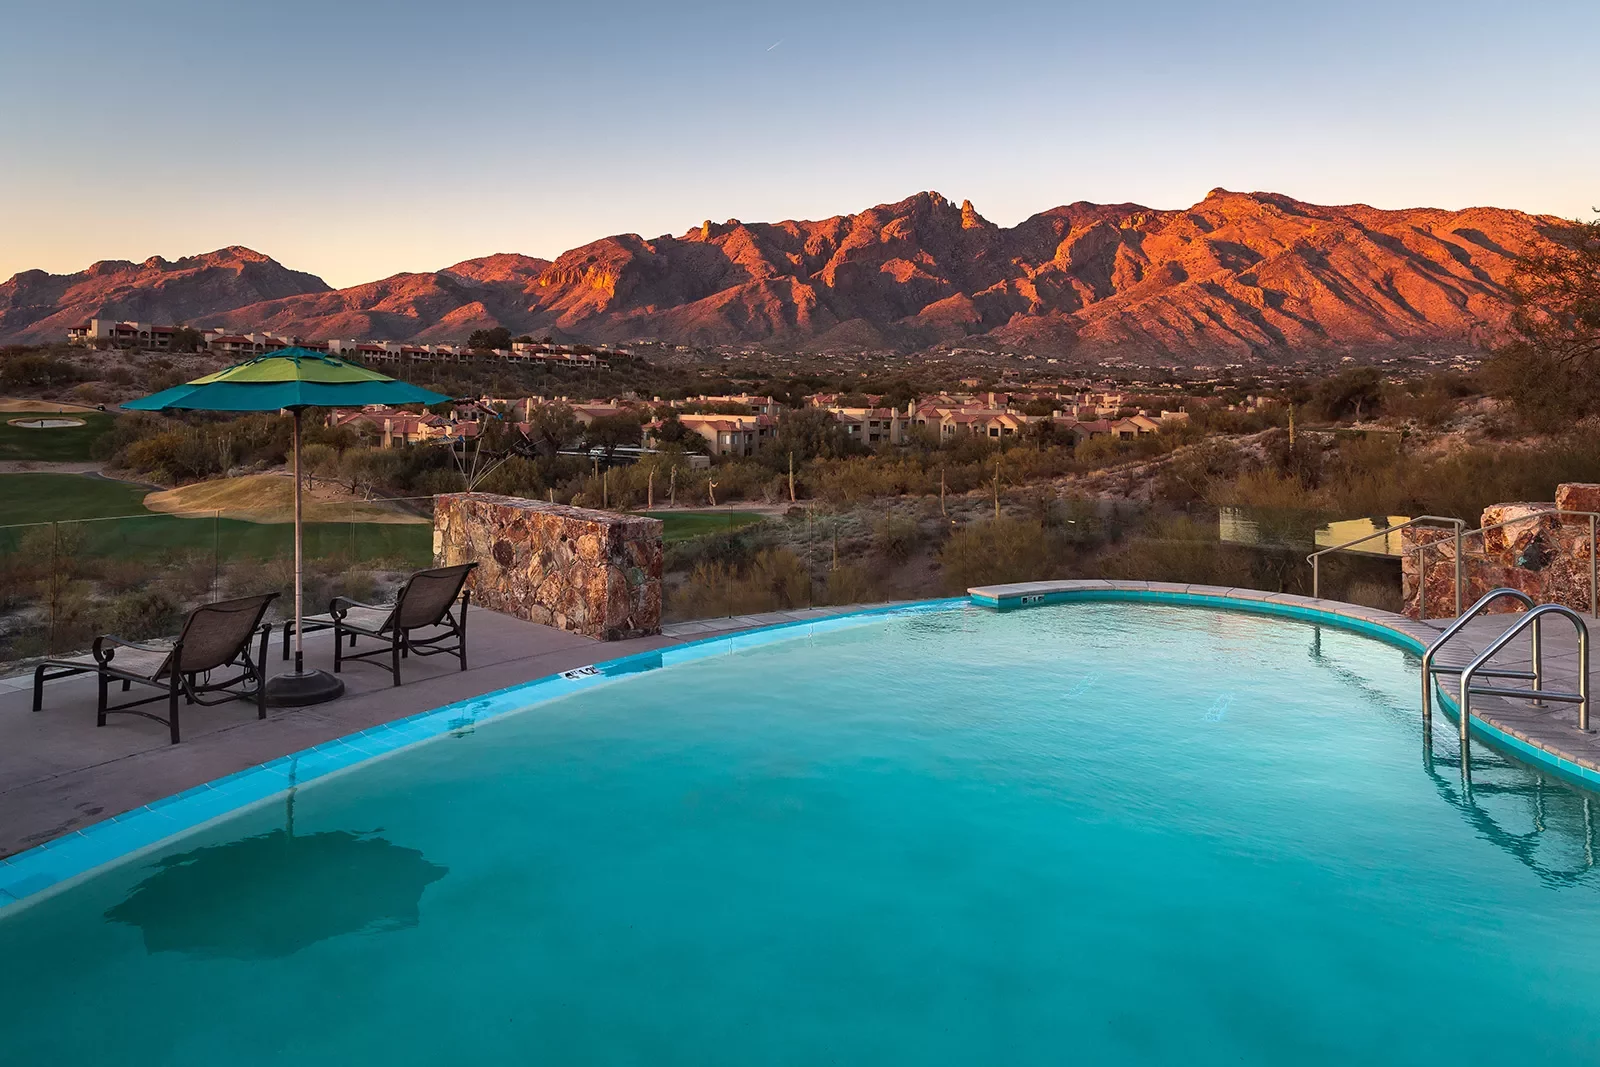 Pool shot AZ at sunset with mountain landscape